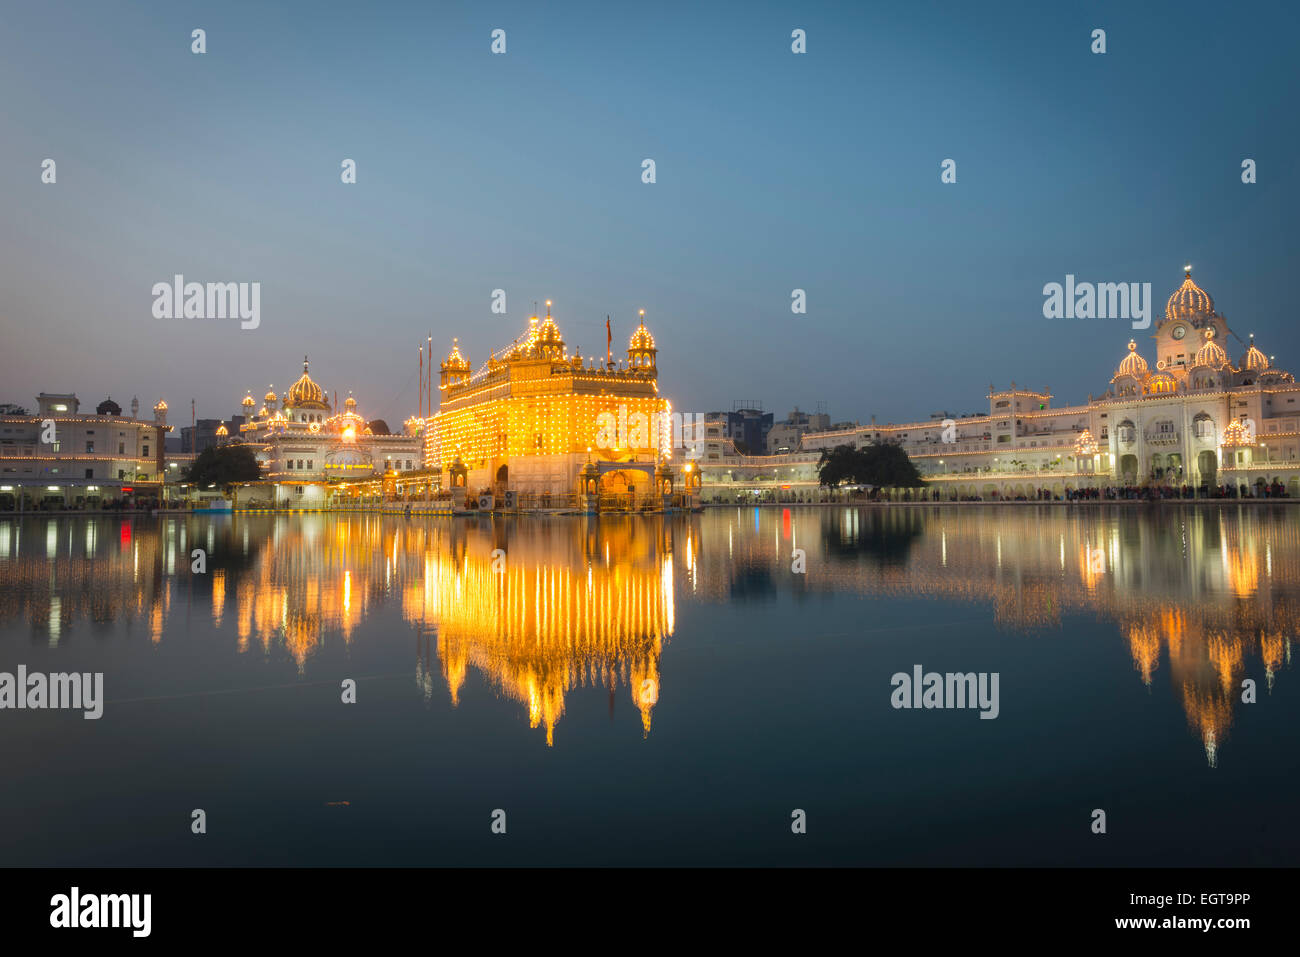 The Golden Temple of the Harmandir Sahib lit up at dusk in Amritsar, India Stock Photo